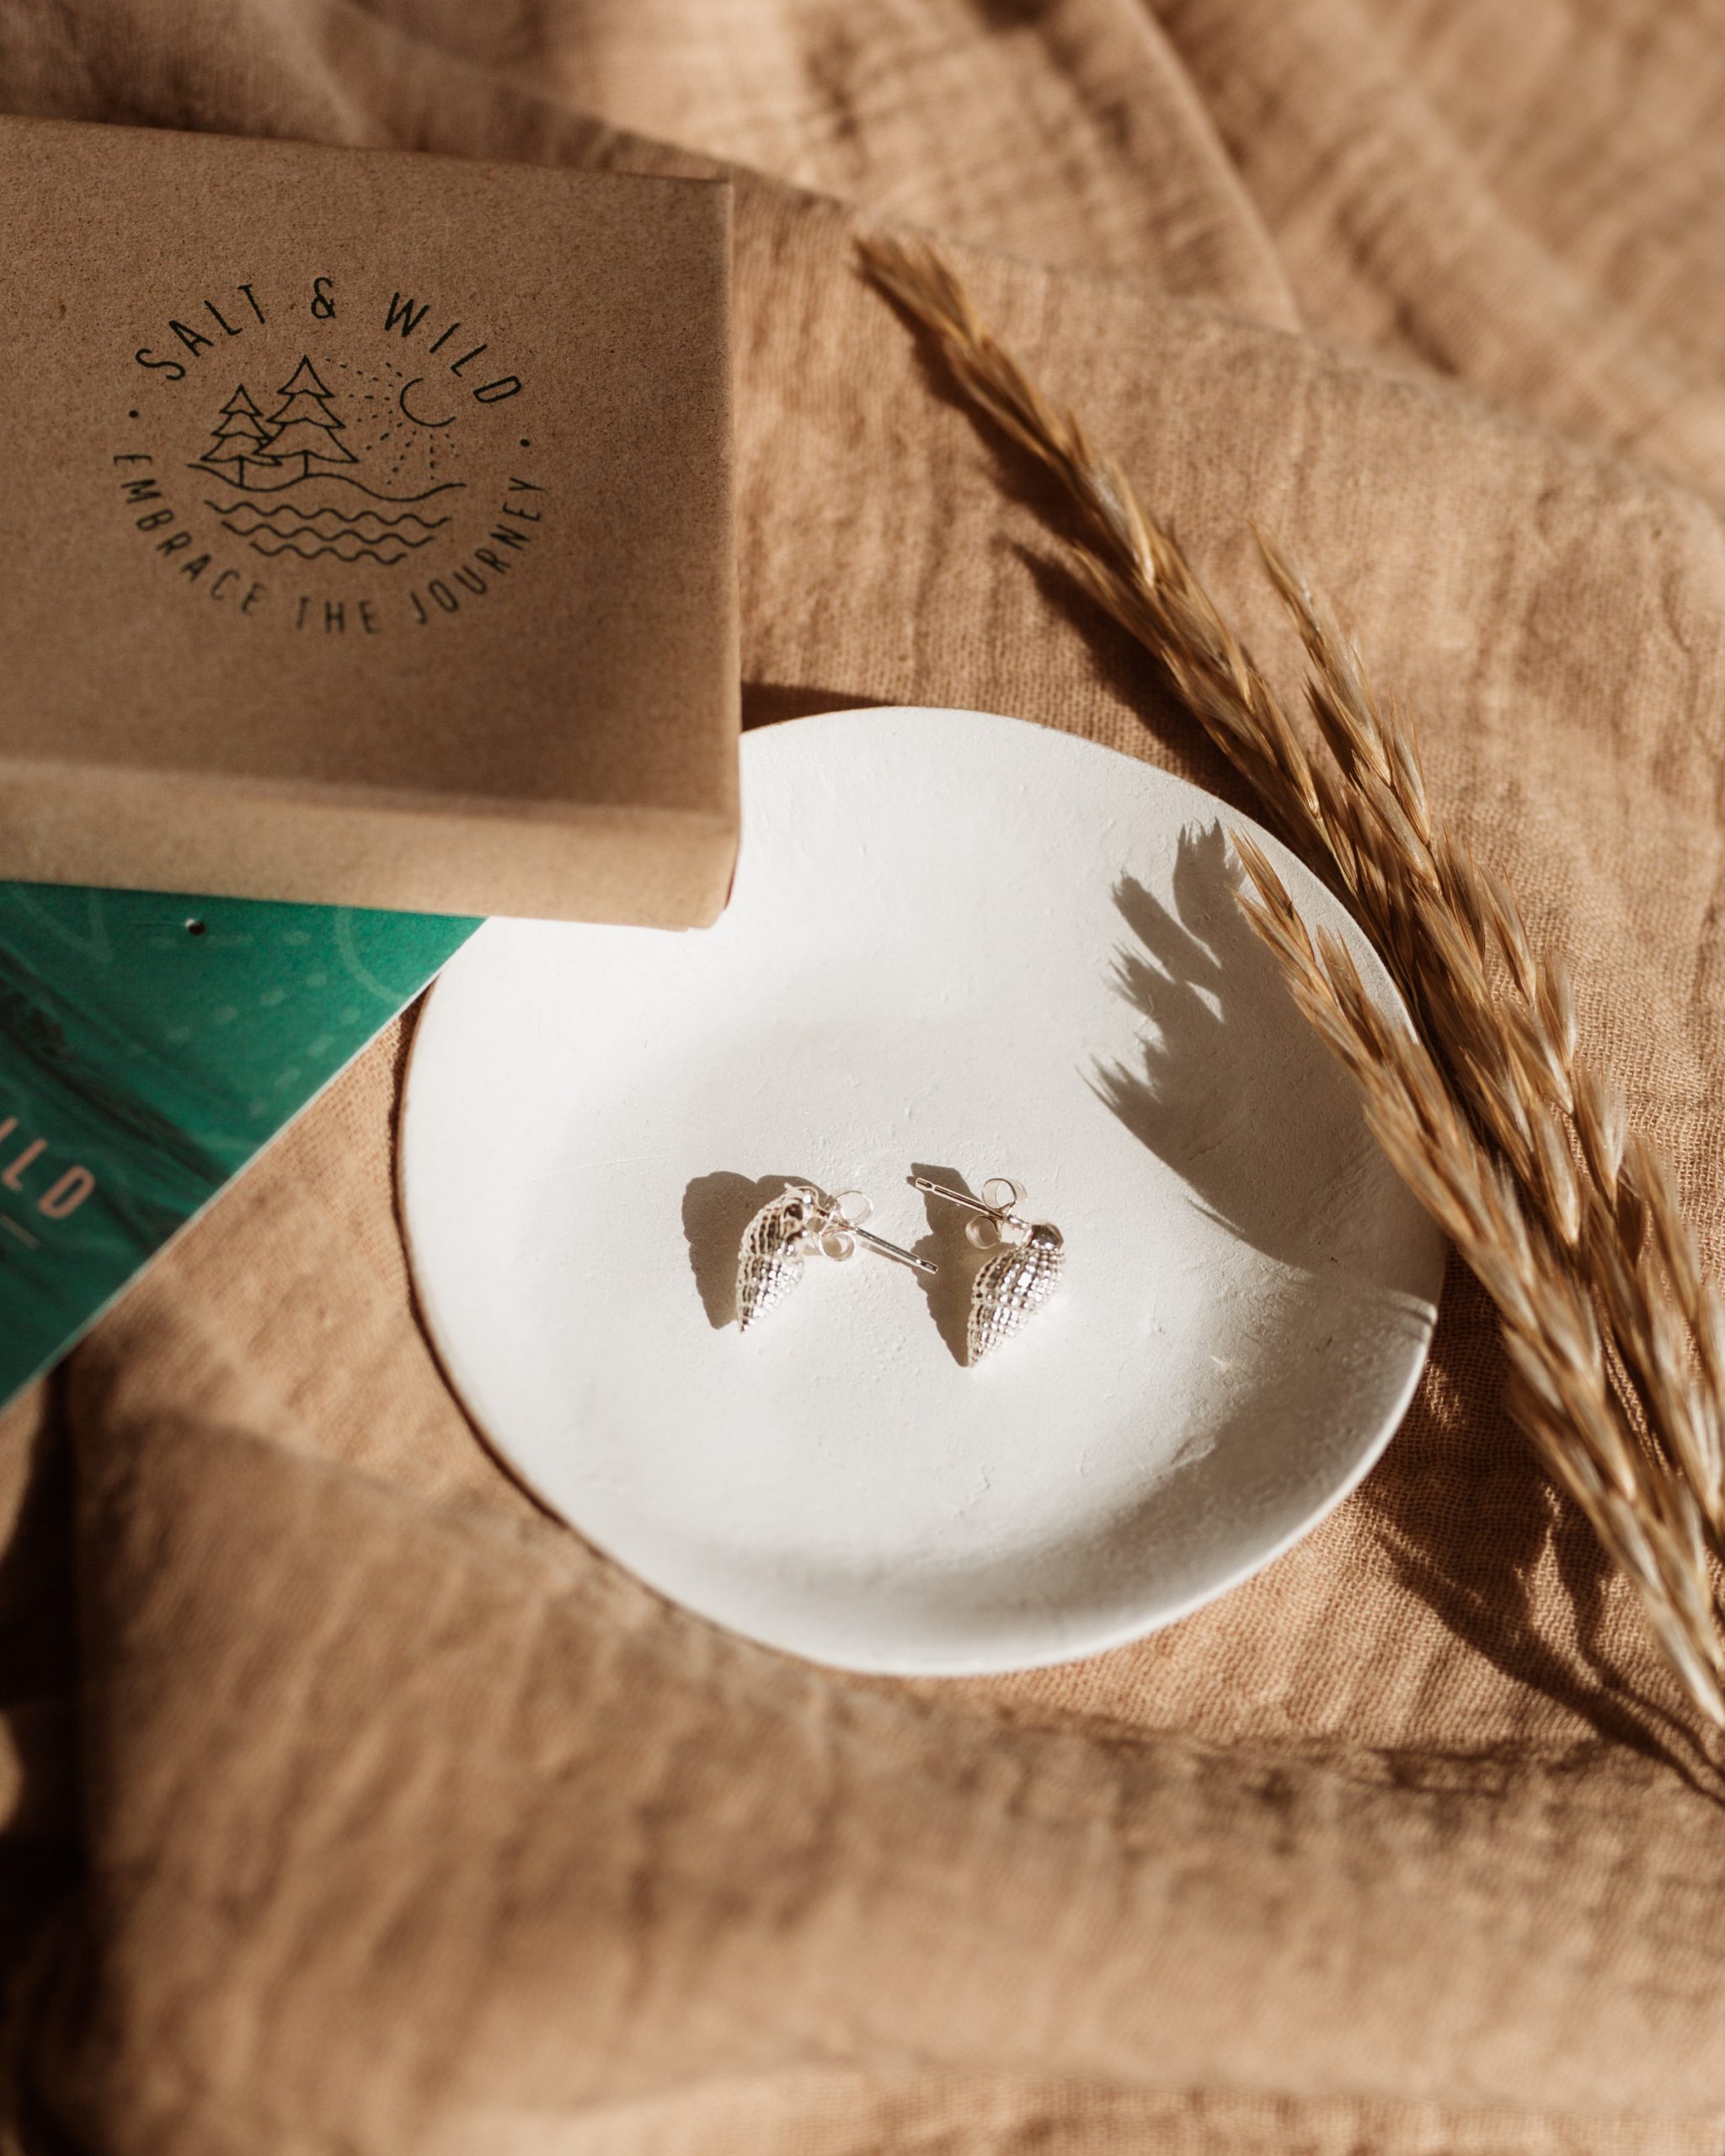 ethical silver whelk stud earrings by Salt & Wild